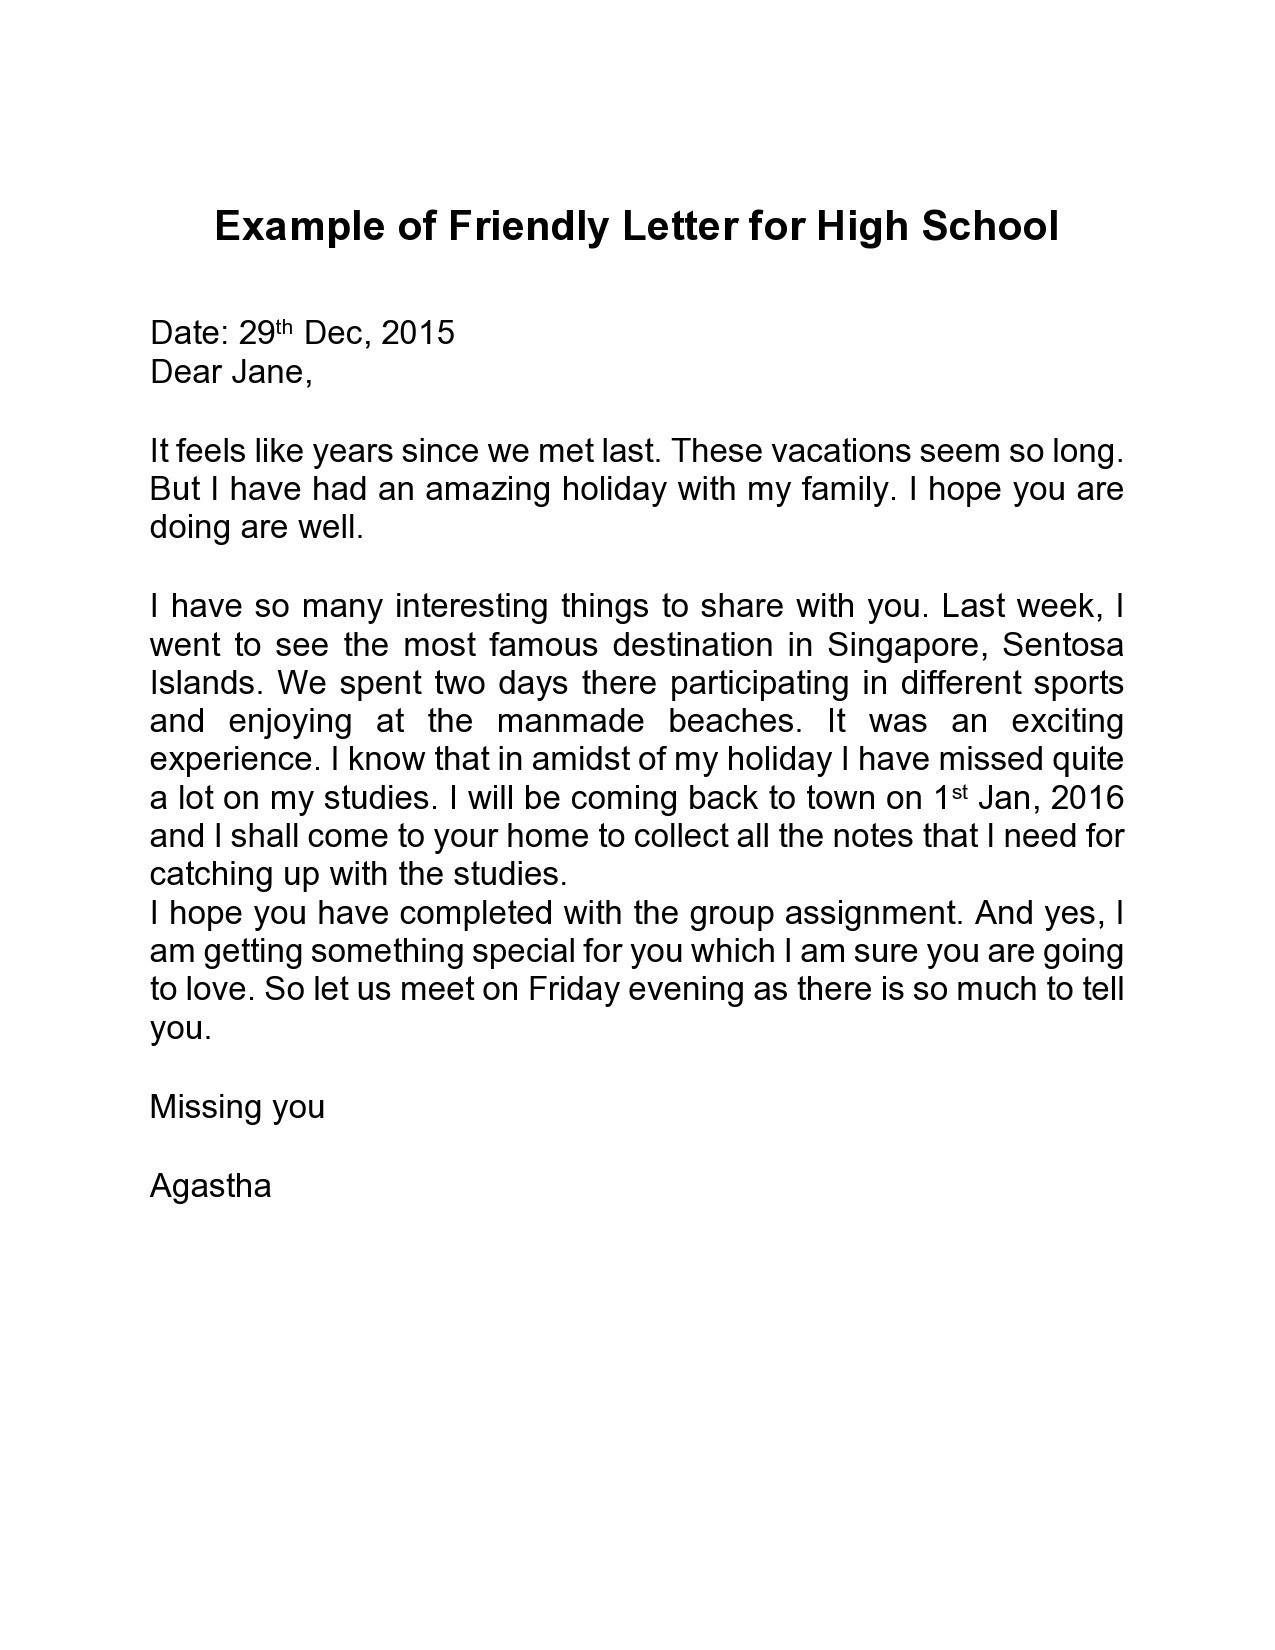 Free friendly letter format 21